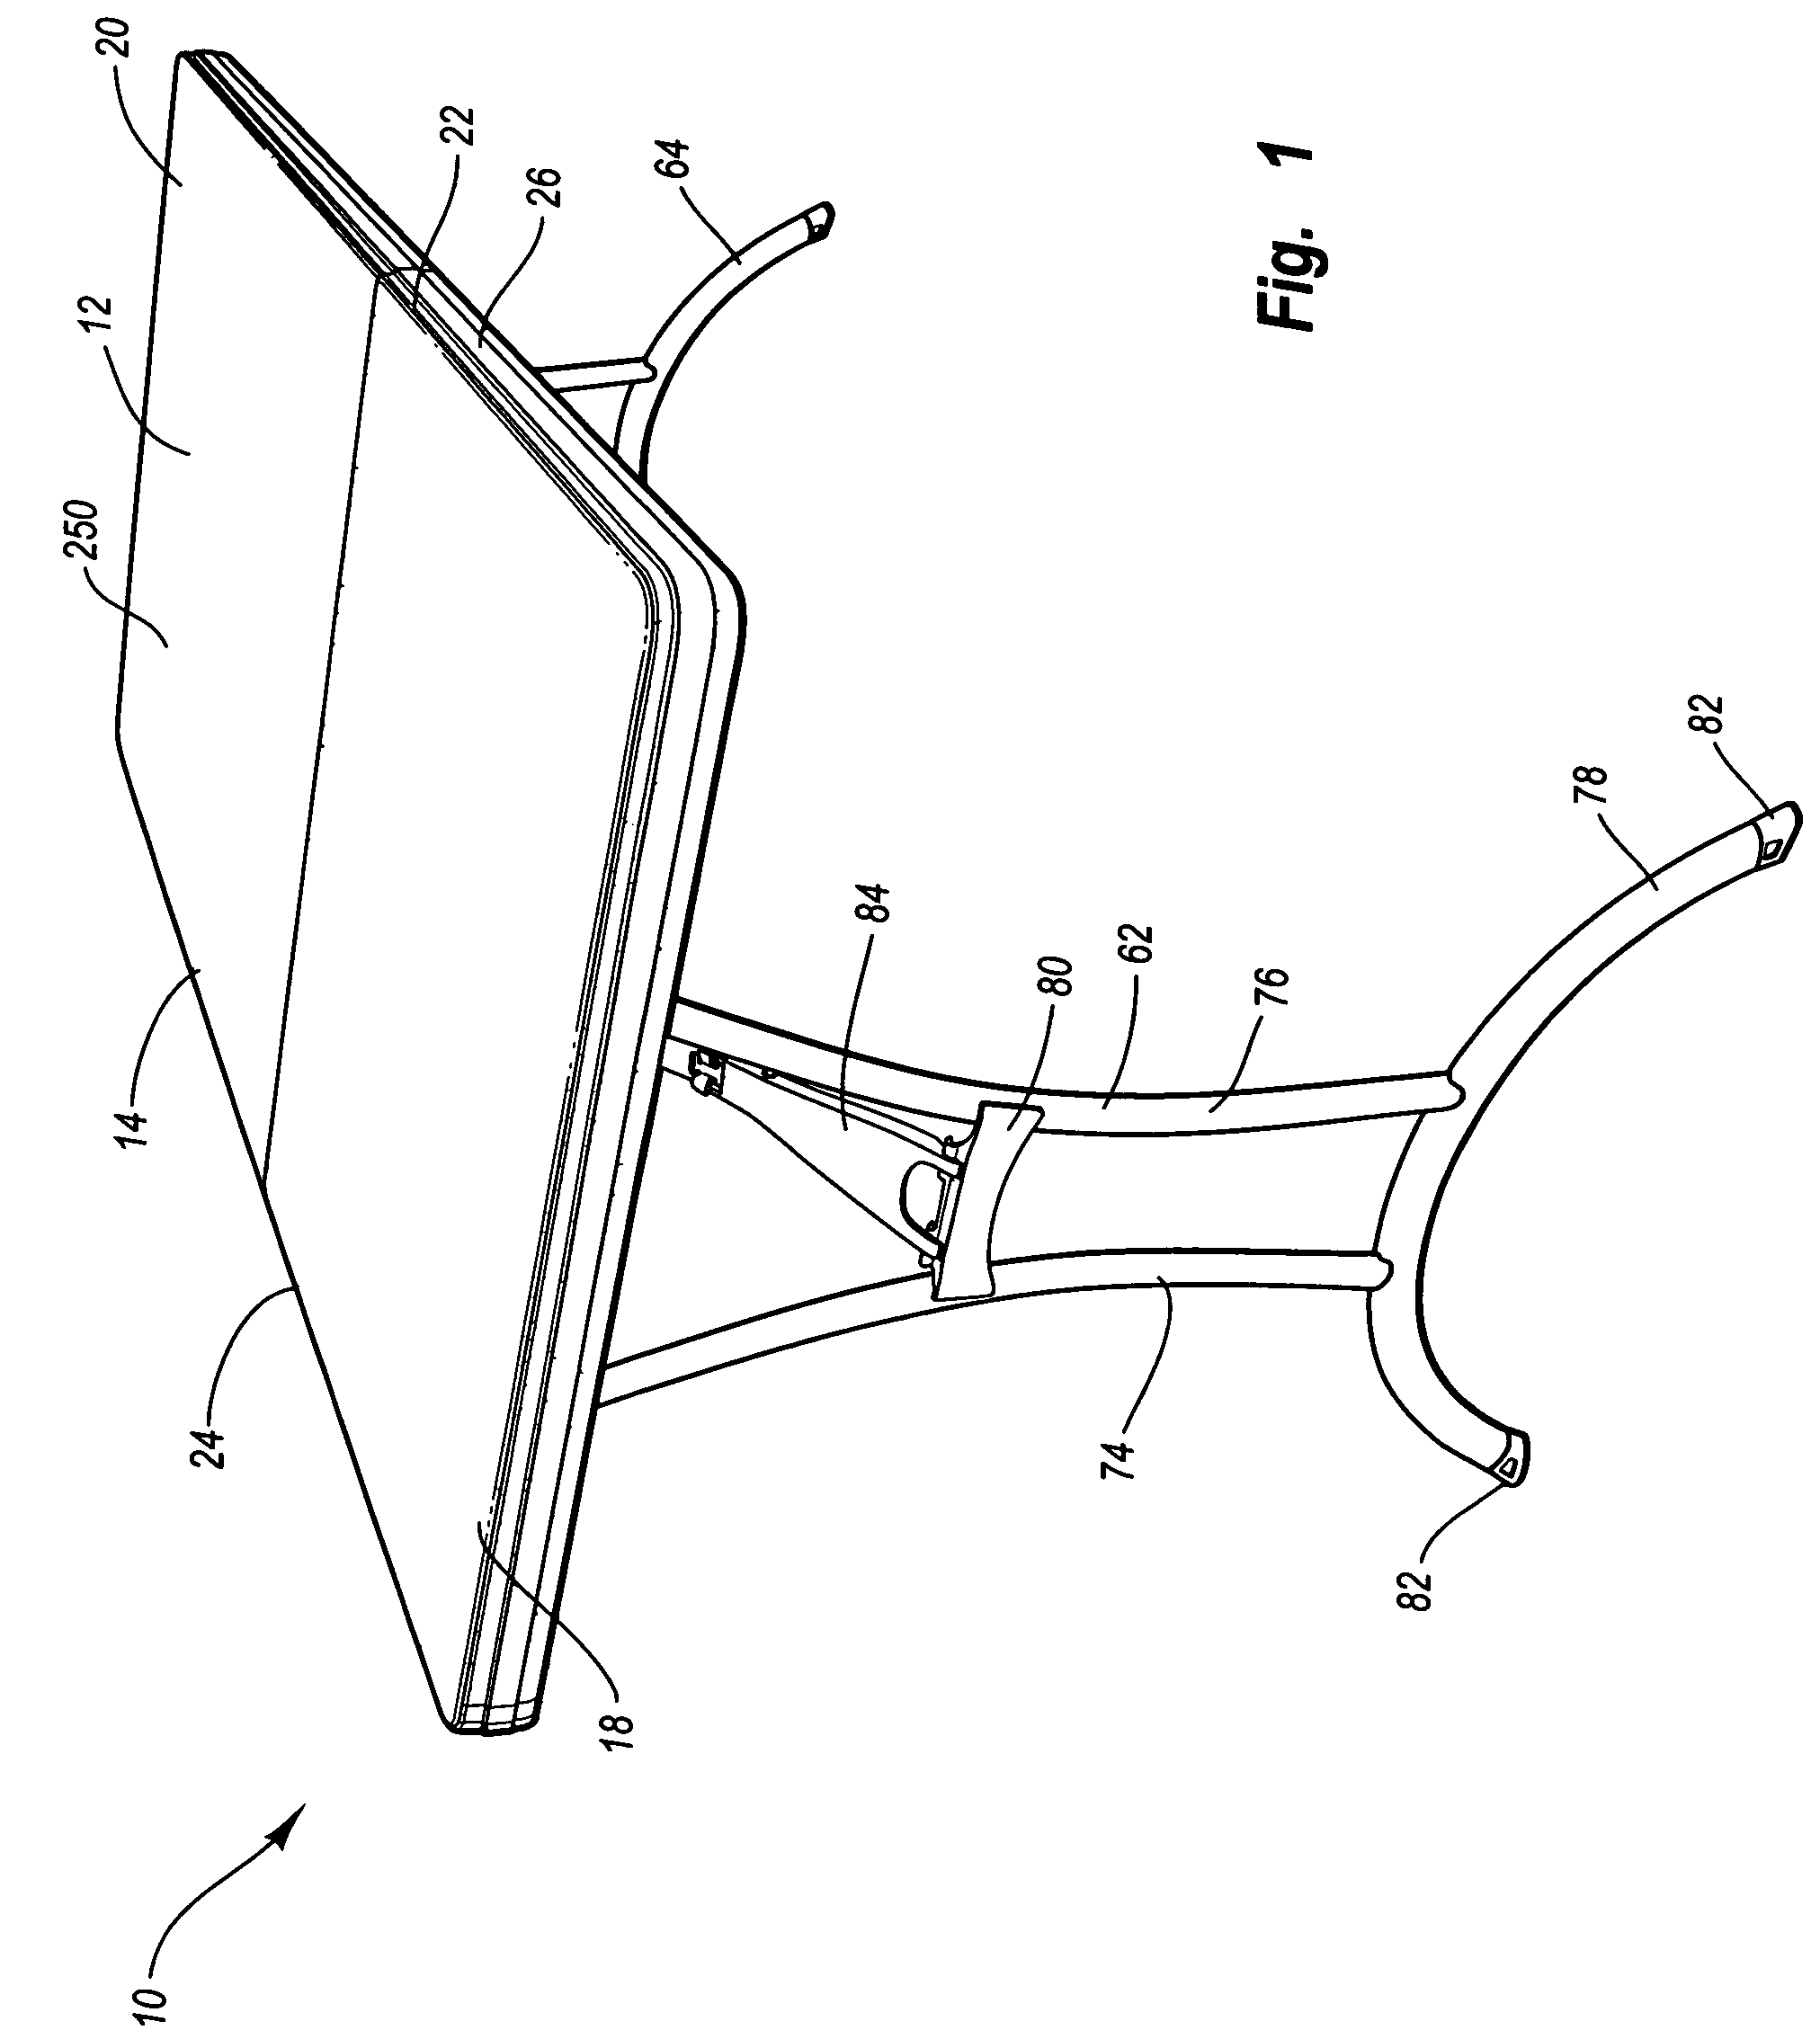 Portable folding table with locking hinge